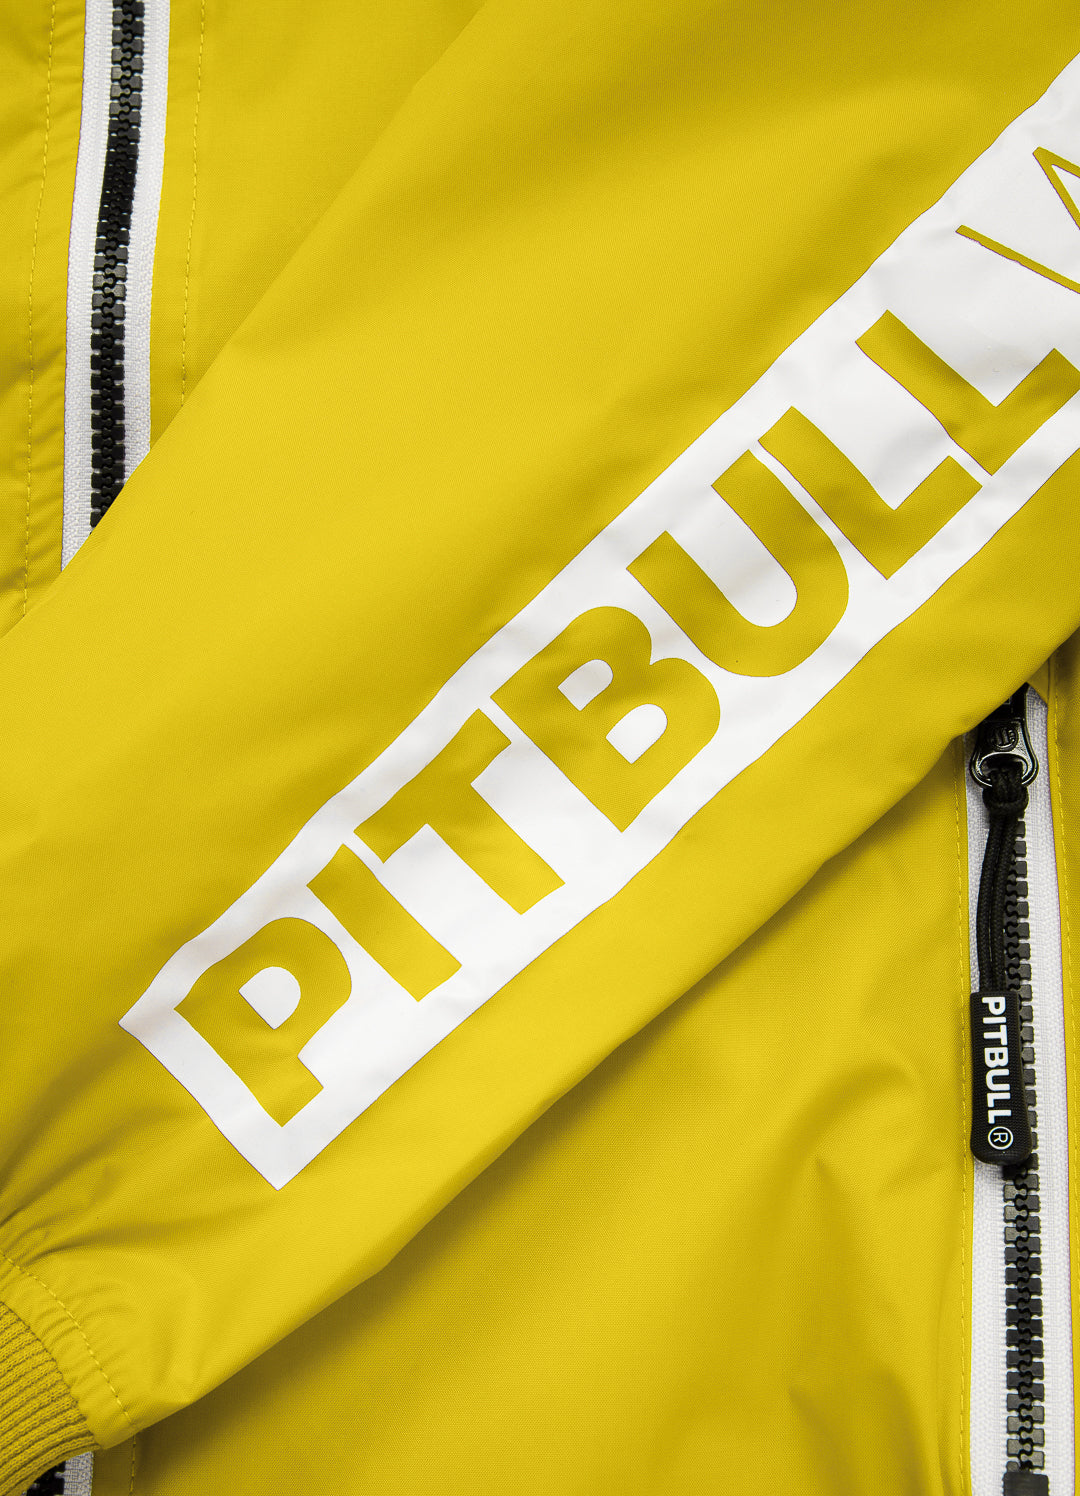 Women Hooded Nylon Jacket AARICIA Sleeve Yellow - Pitbull West Coast International Store 